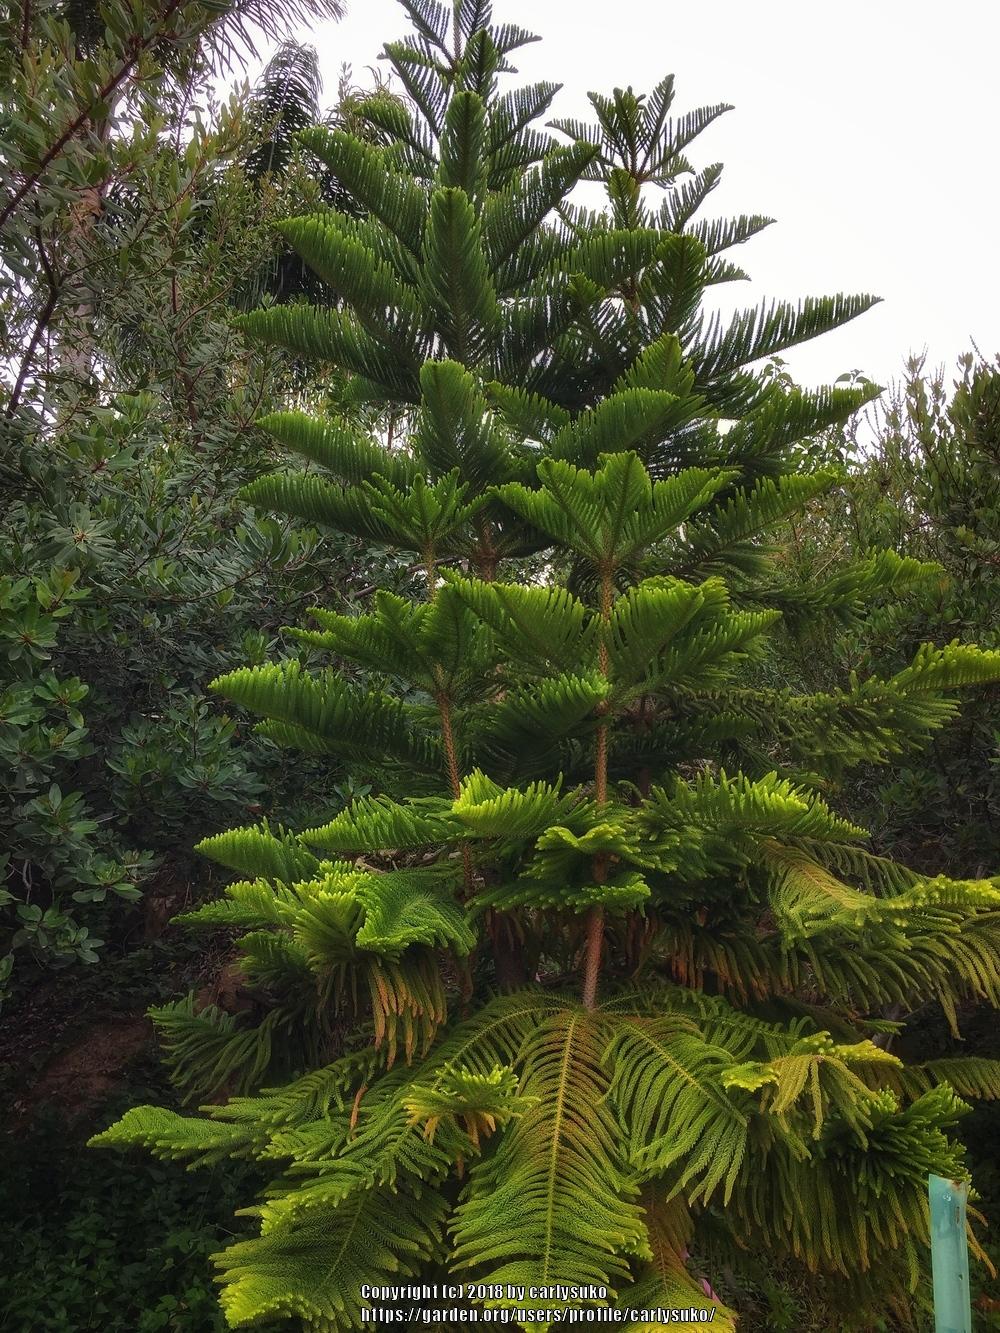 Photo of Norfolk Island Pine (Araucaria heterophylla) uploaded by carlysuko